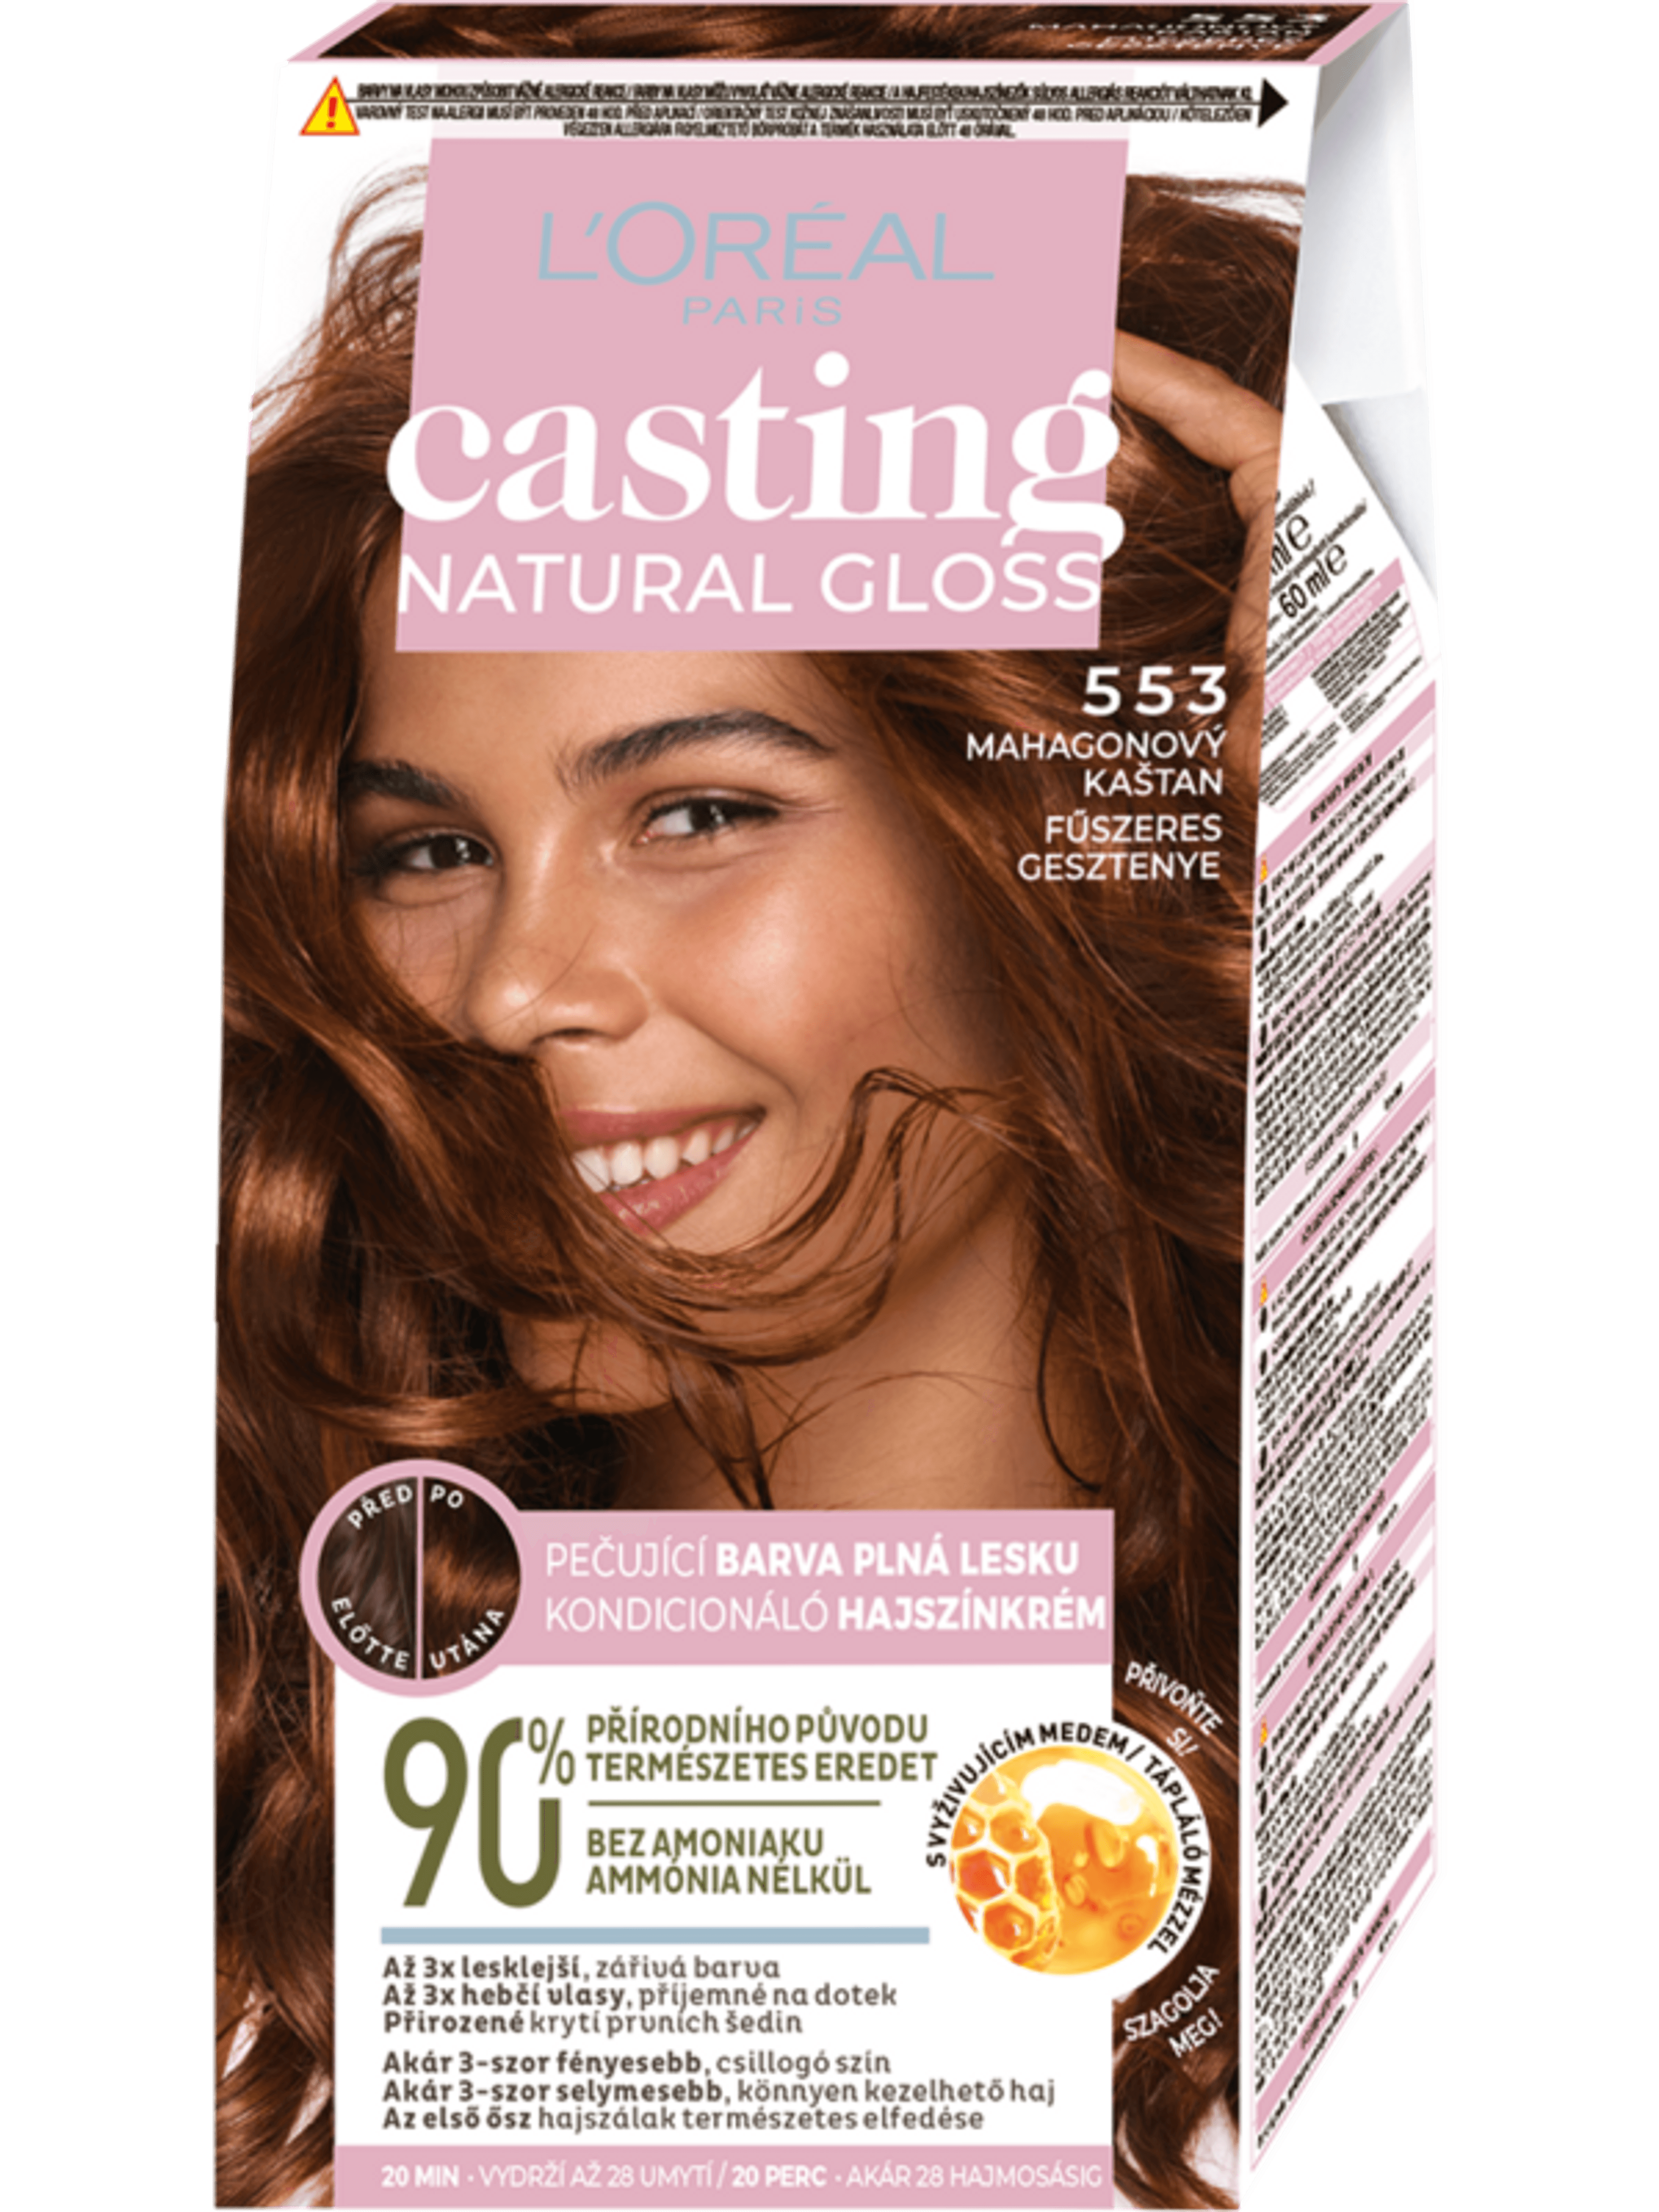 L'Oreal Paris Casting Natural Gloss hajszínező, 553 spiced auburn - 1 db